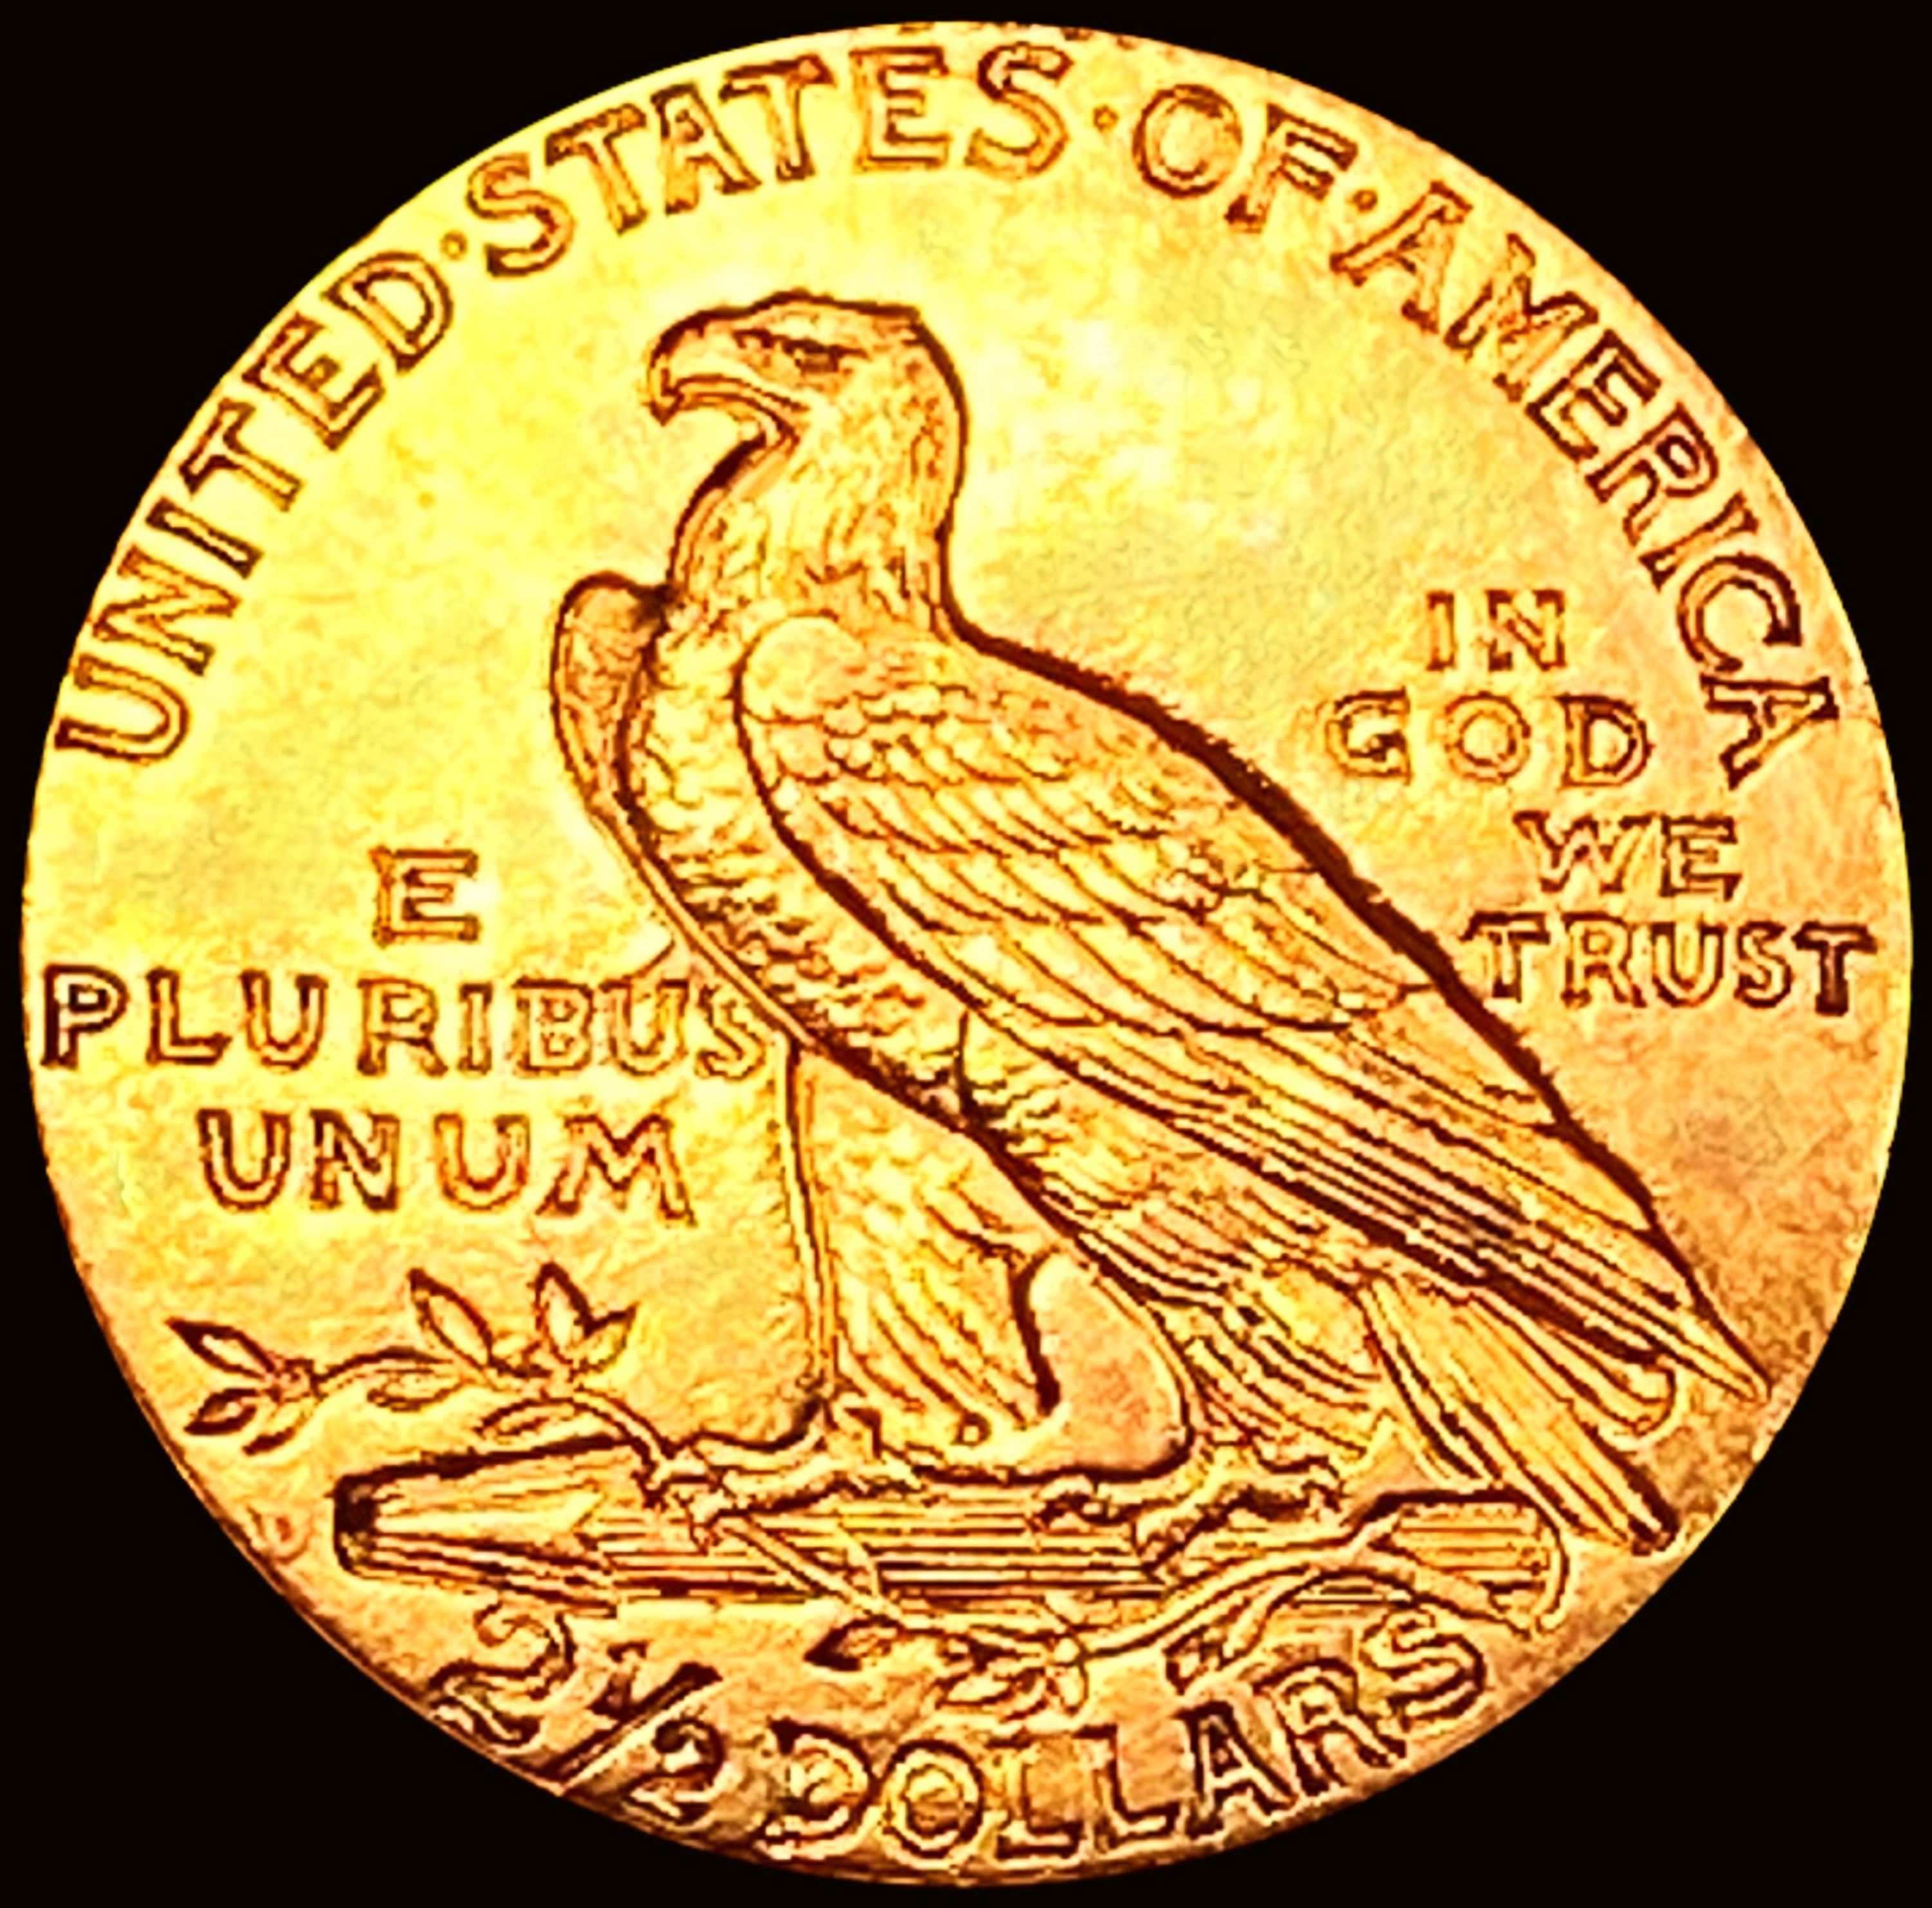 1911-D $2.50 Gold Quarter Eagle CHOICE BU